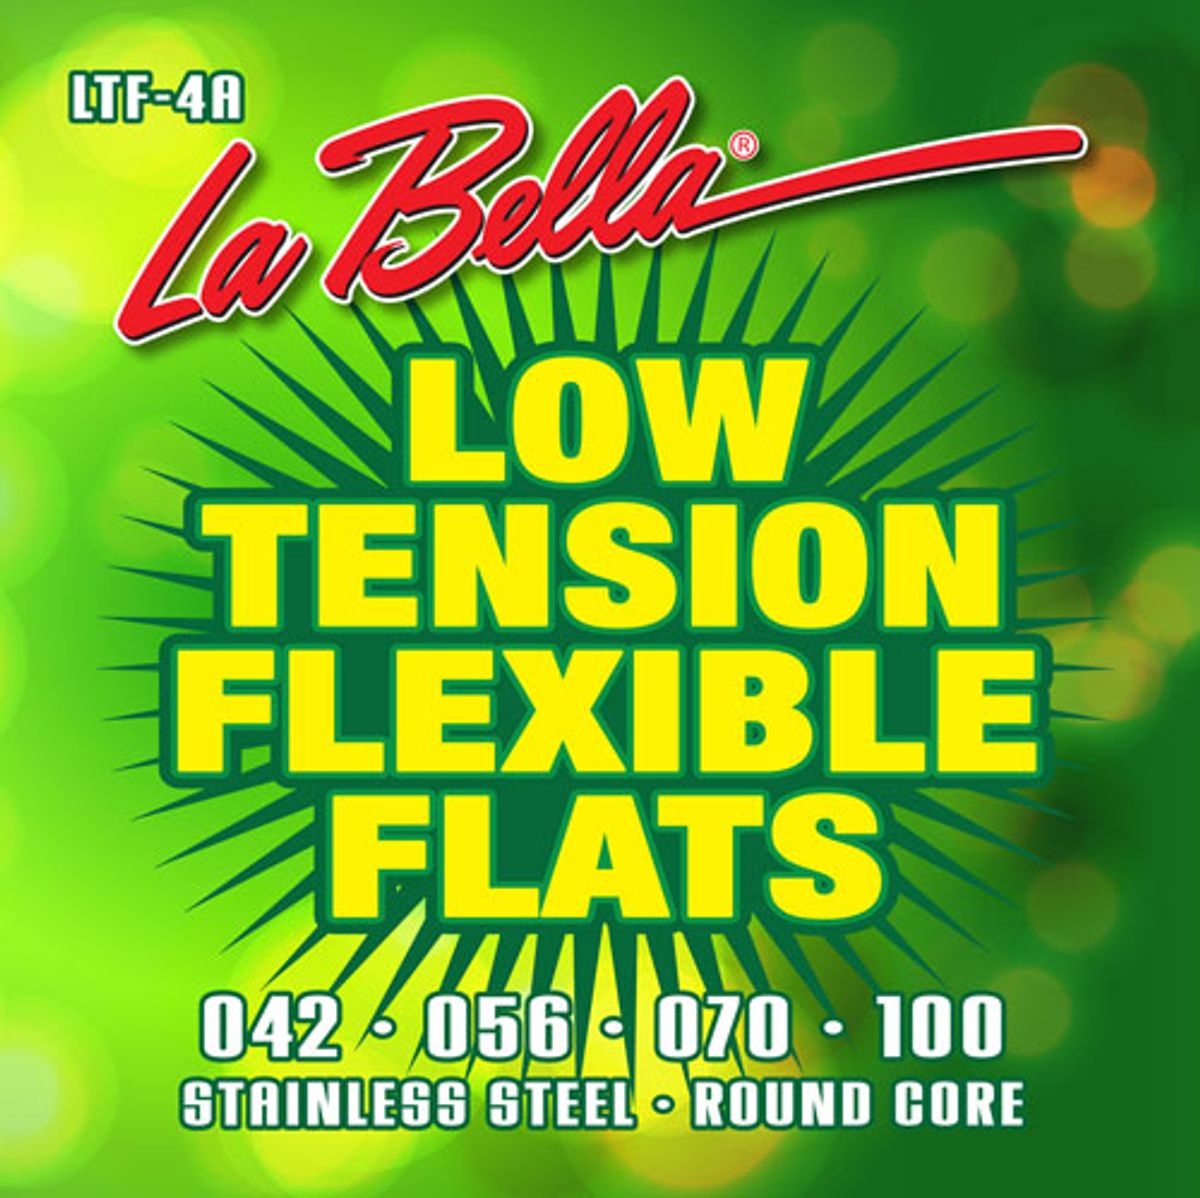 LaBella Strings Announces Low Tension Flexible Flats